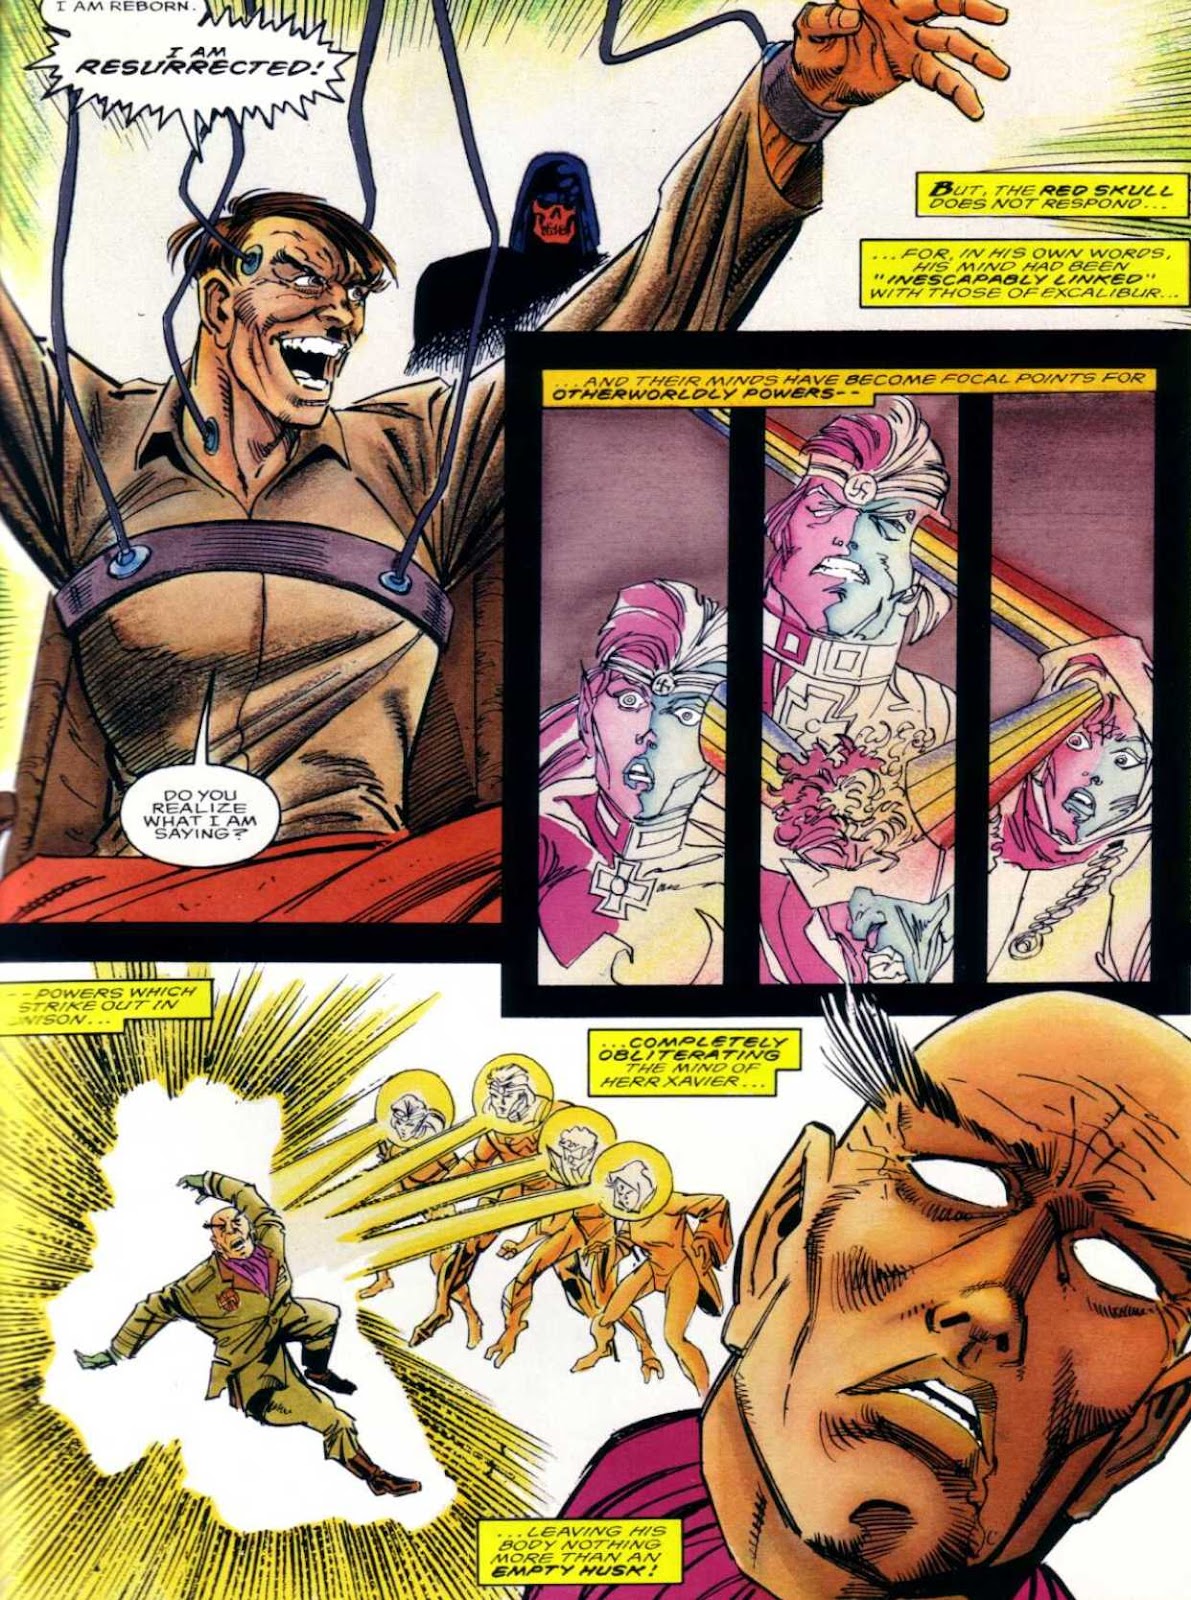 Marvel Graphic Novel issue 66 - Excalibur - Weird War III - Page 52